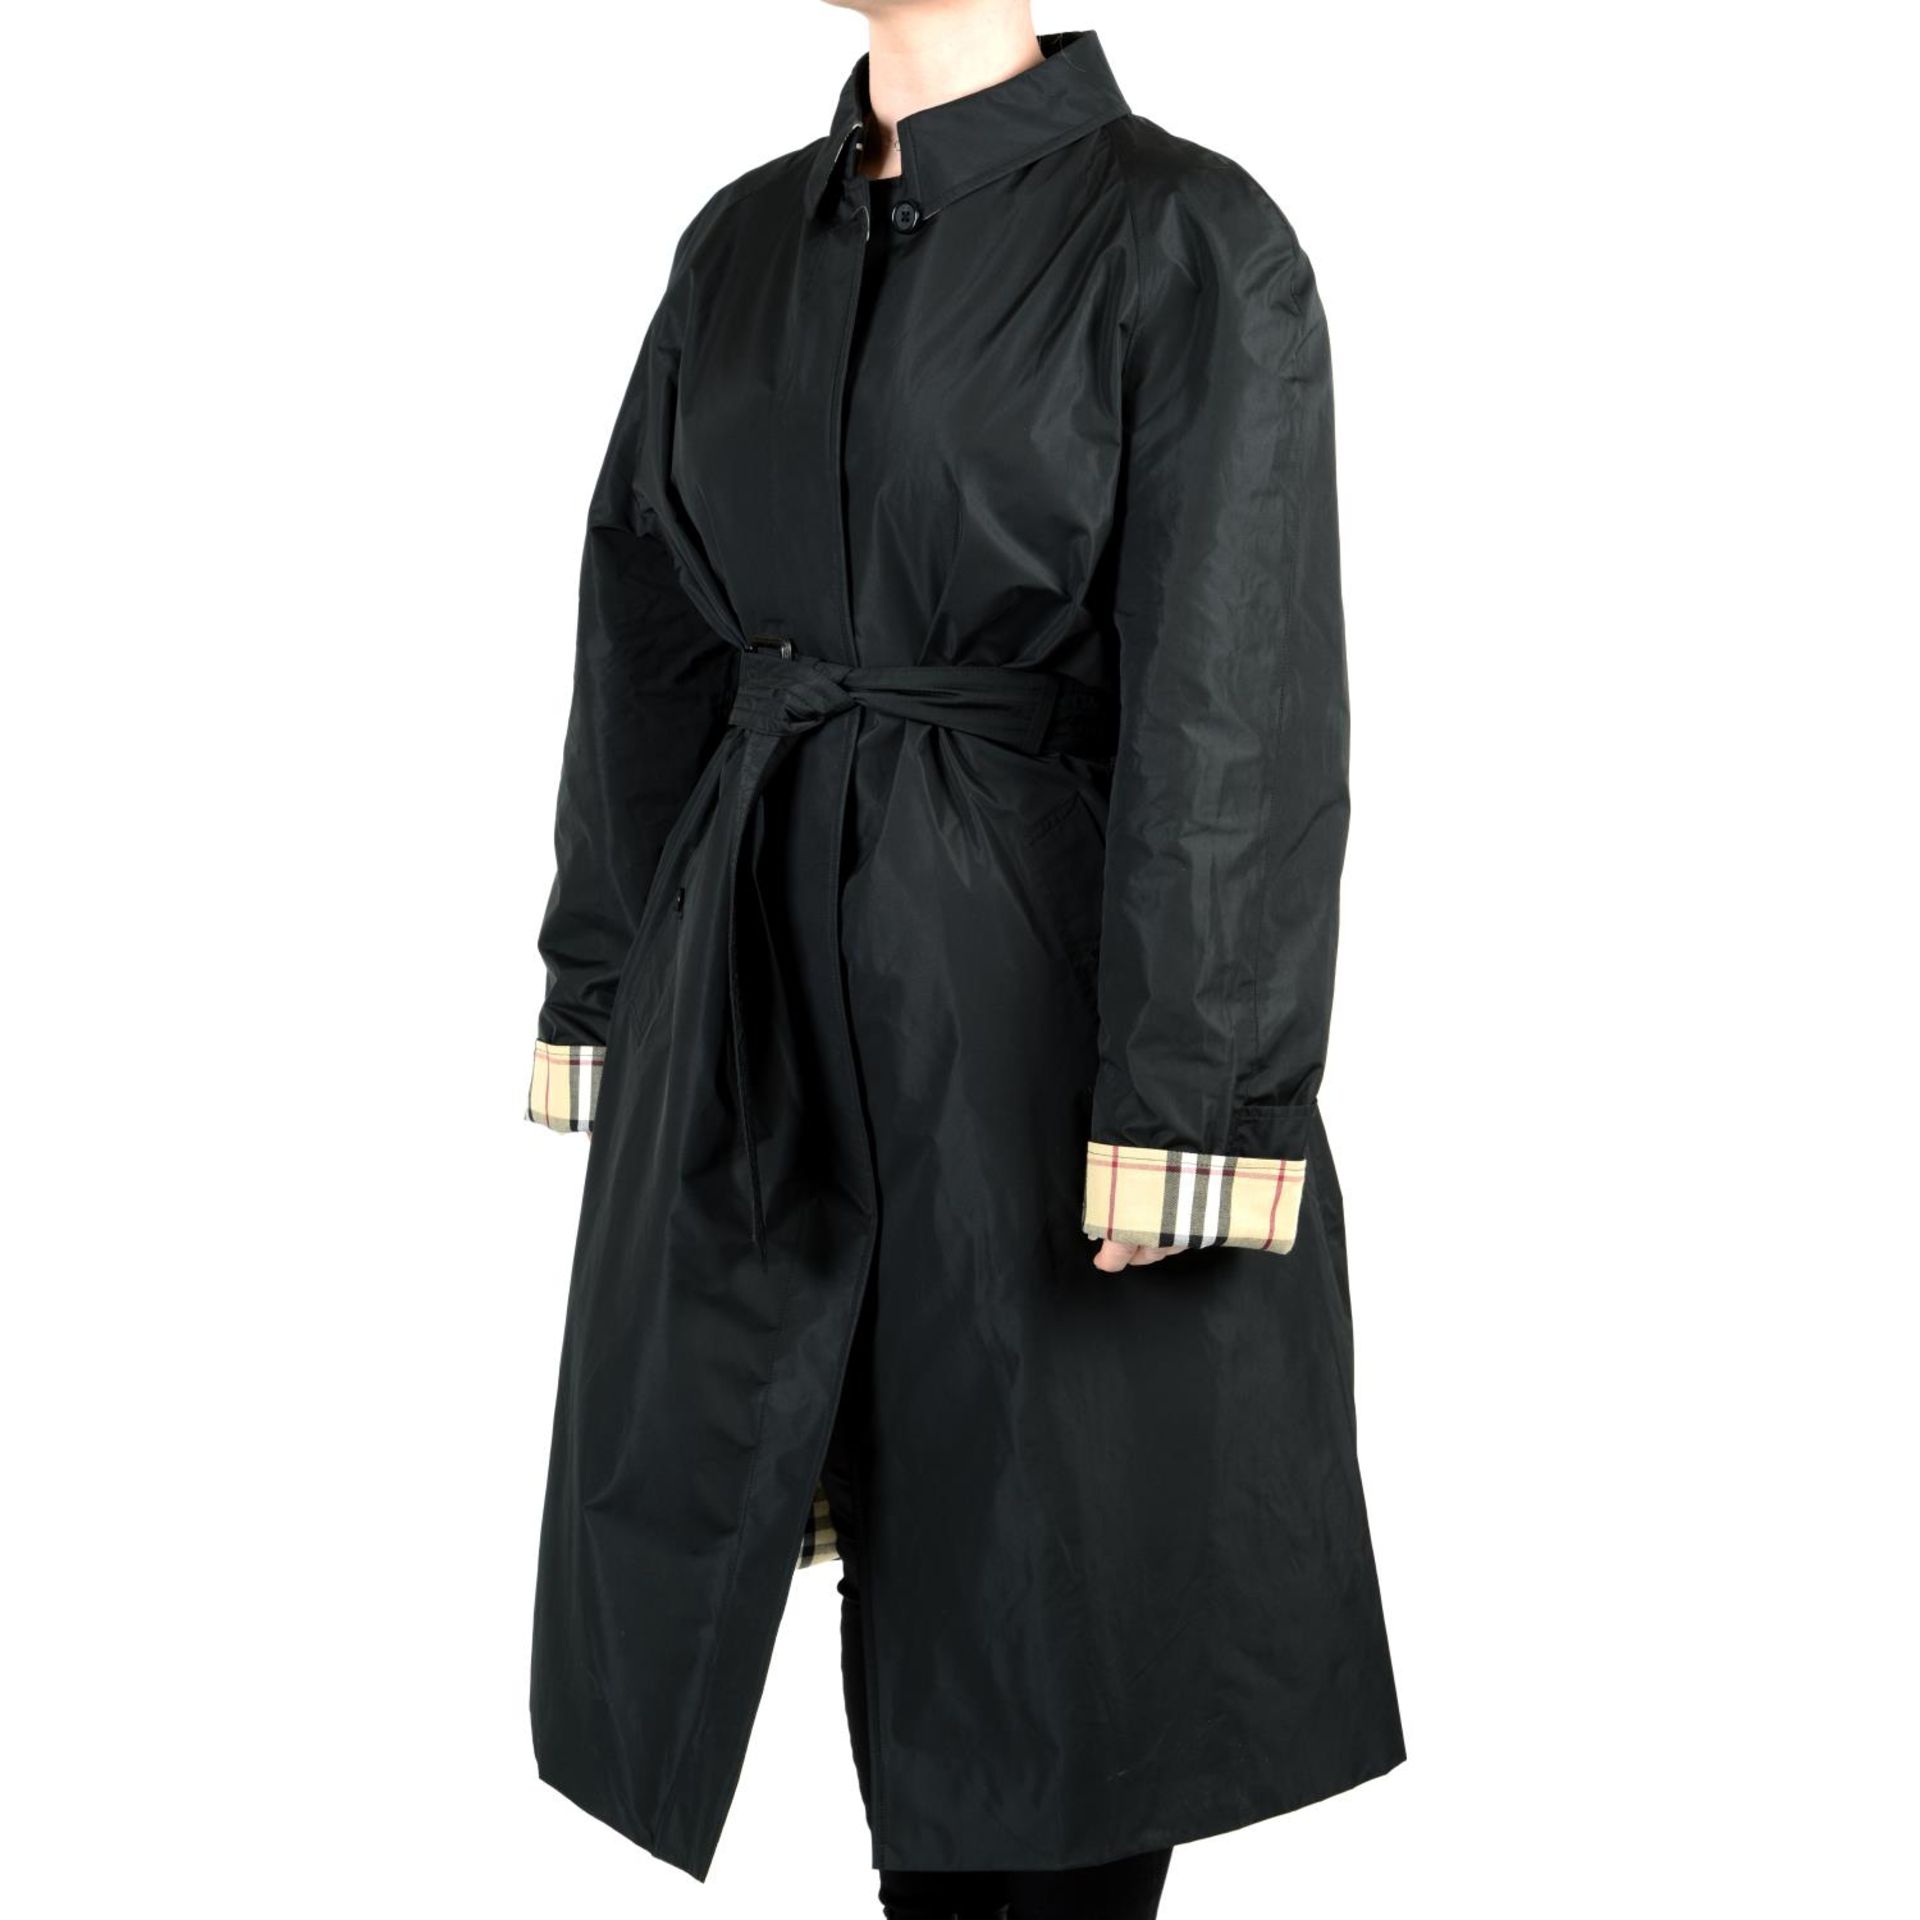 BURBERRY - a black raincoat. - Image 3 of 4